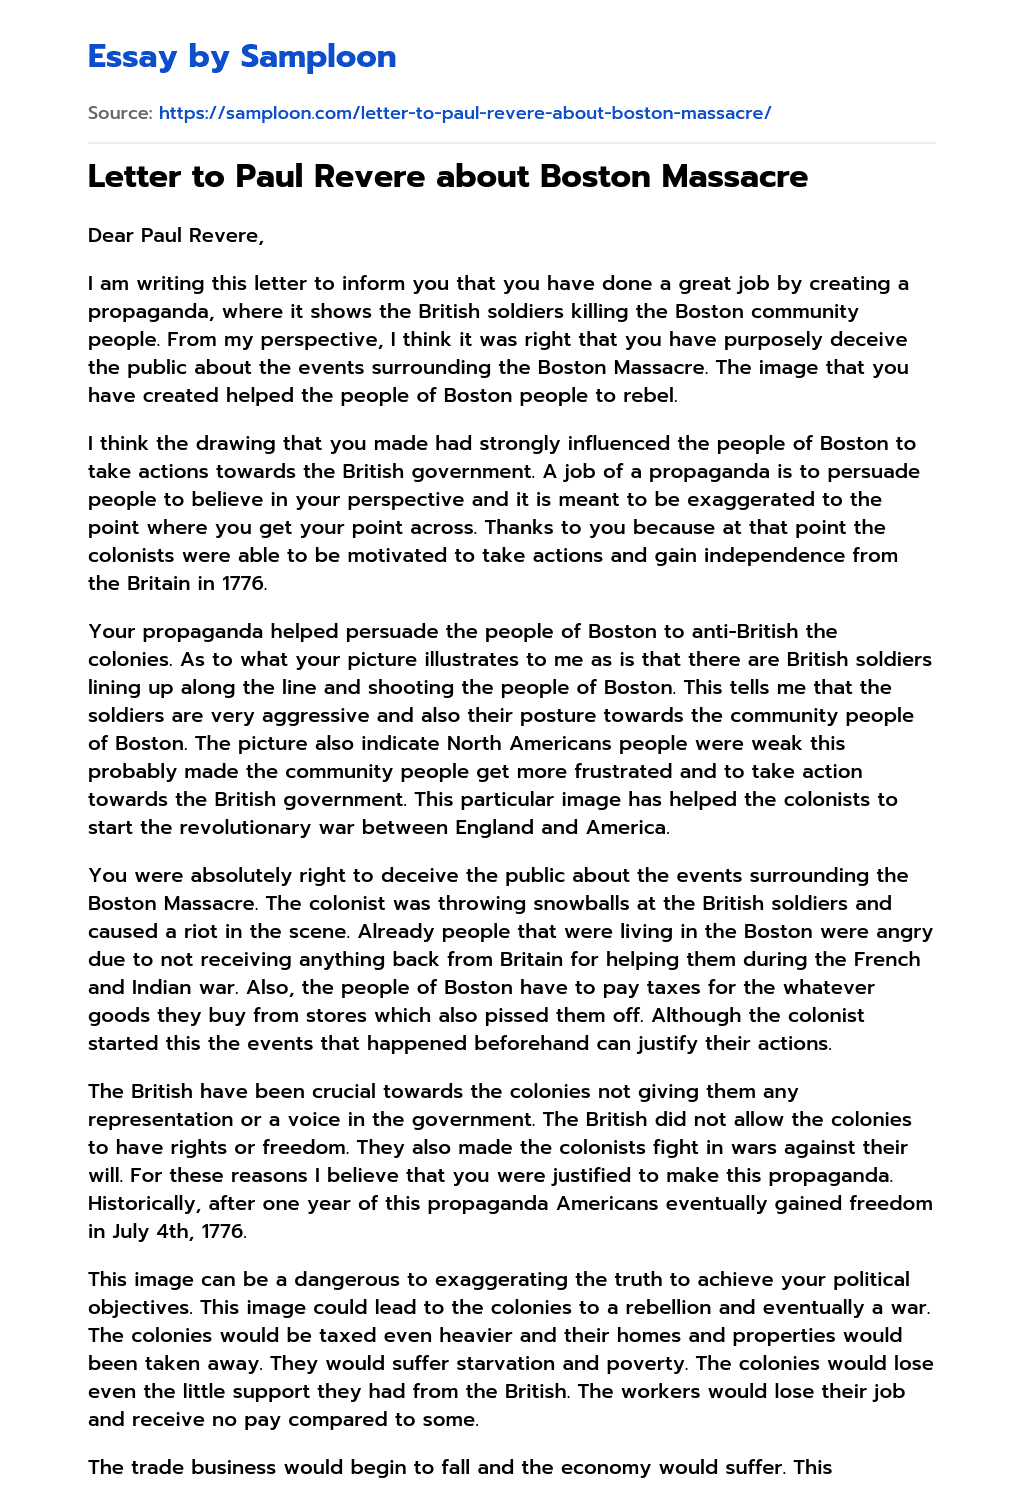 Letter to Paul Revere about Boston Massacre essay